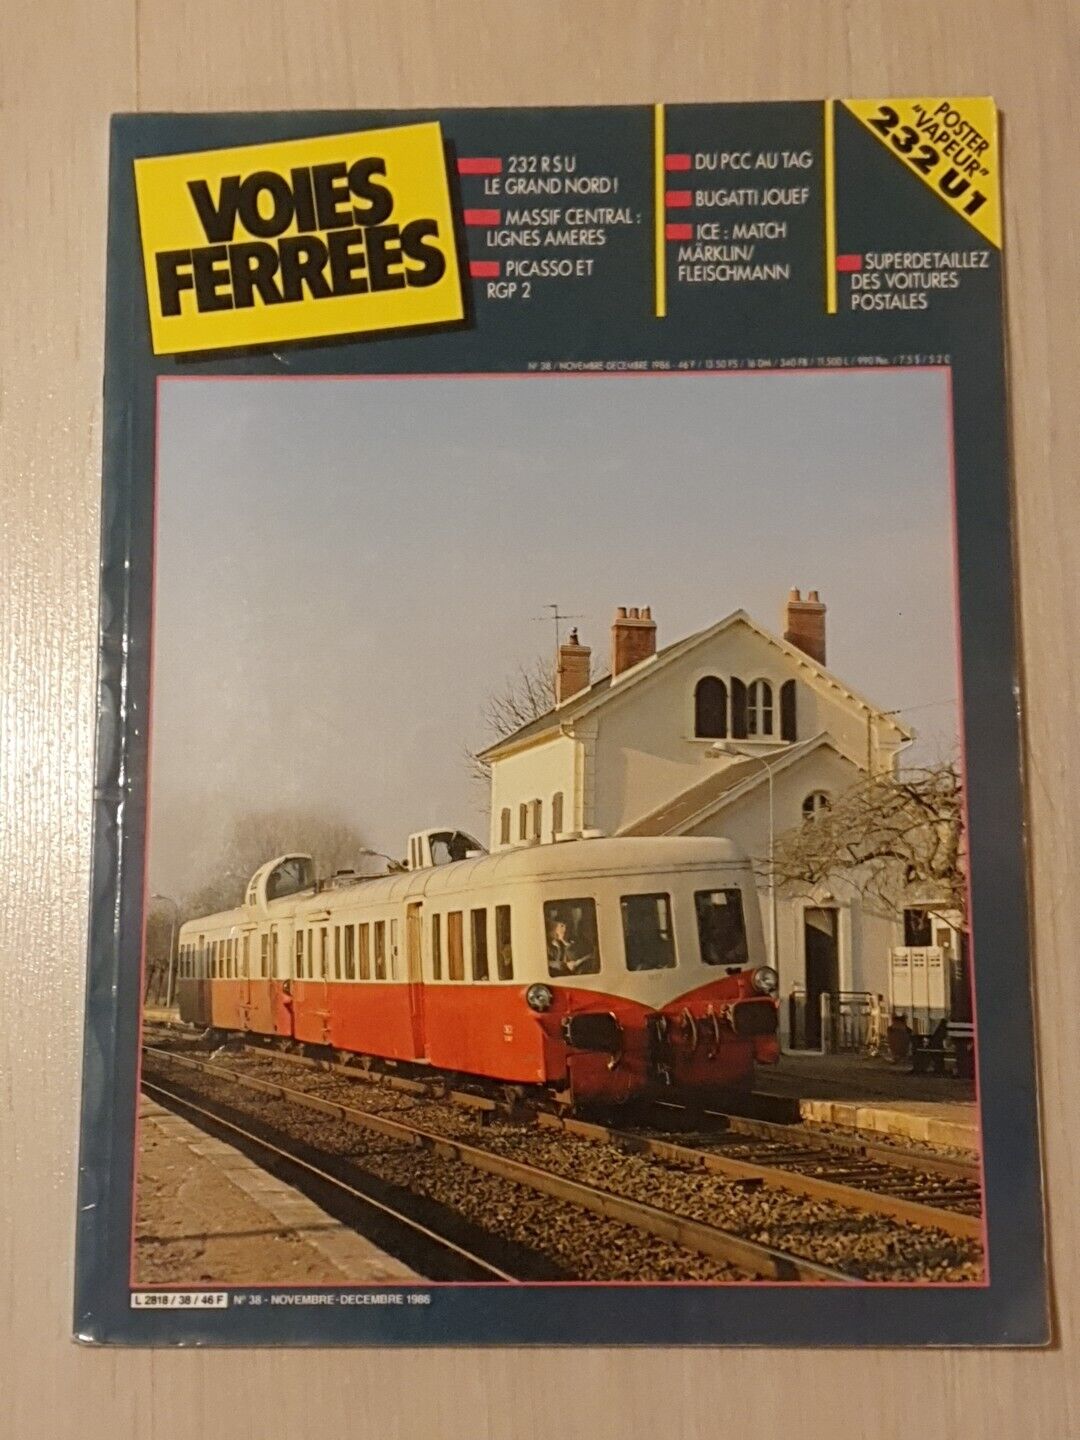 RAILWAYS N°: 38-232 R S U, LE GRAND NORD + POSTER - NOV/DEC 1986